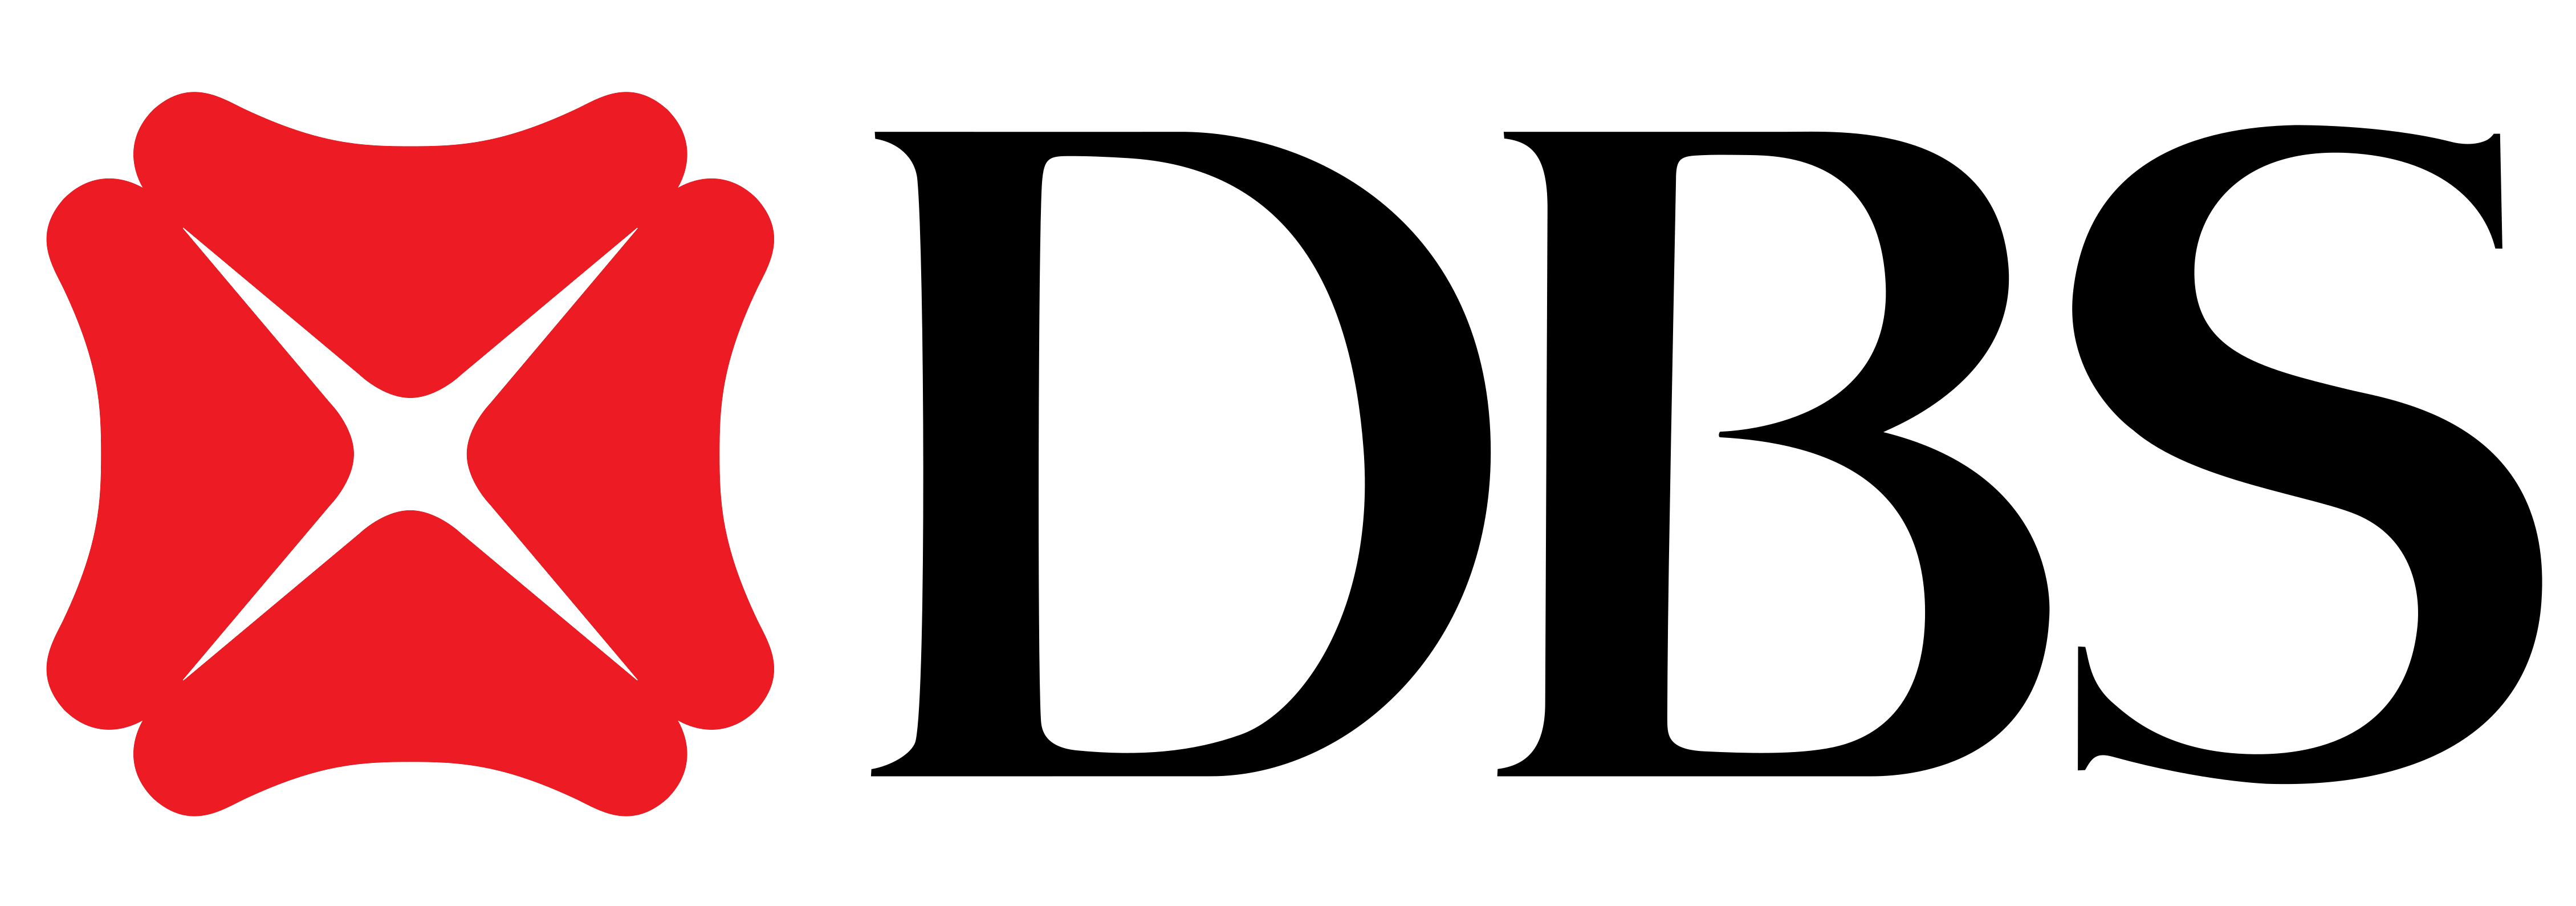 Dbs Logo Vector PNG-PlusPNG.c